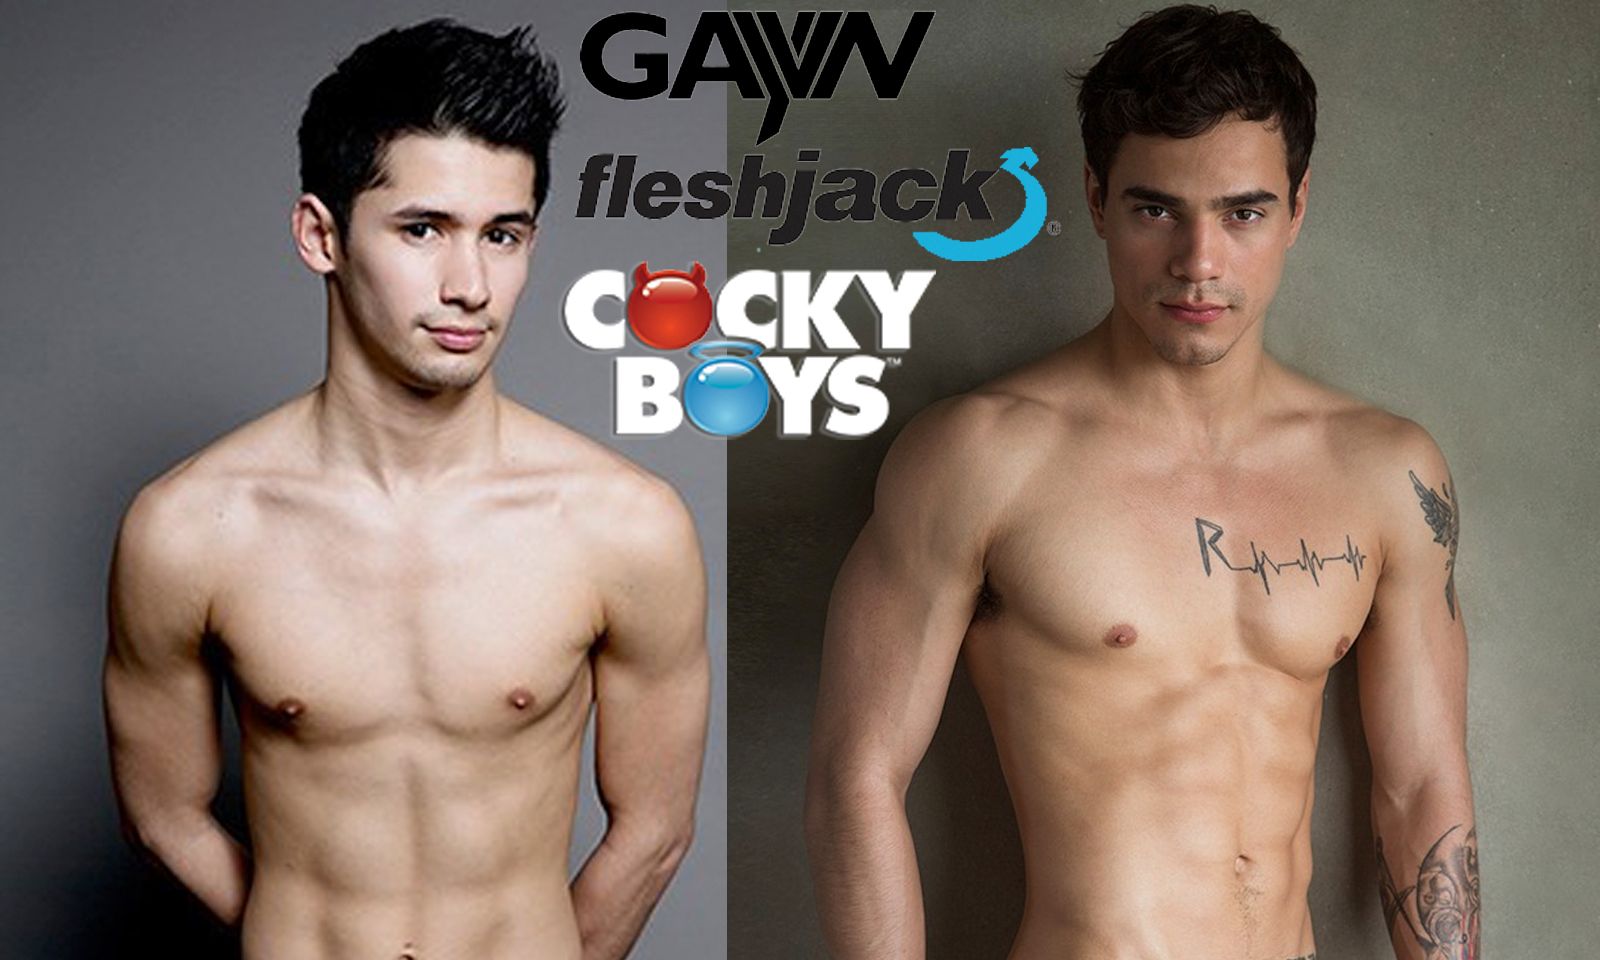 FleshJack Bringing CockyBoys to GayVN Party